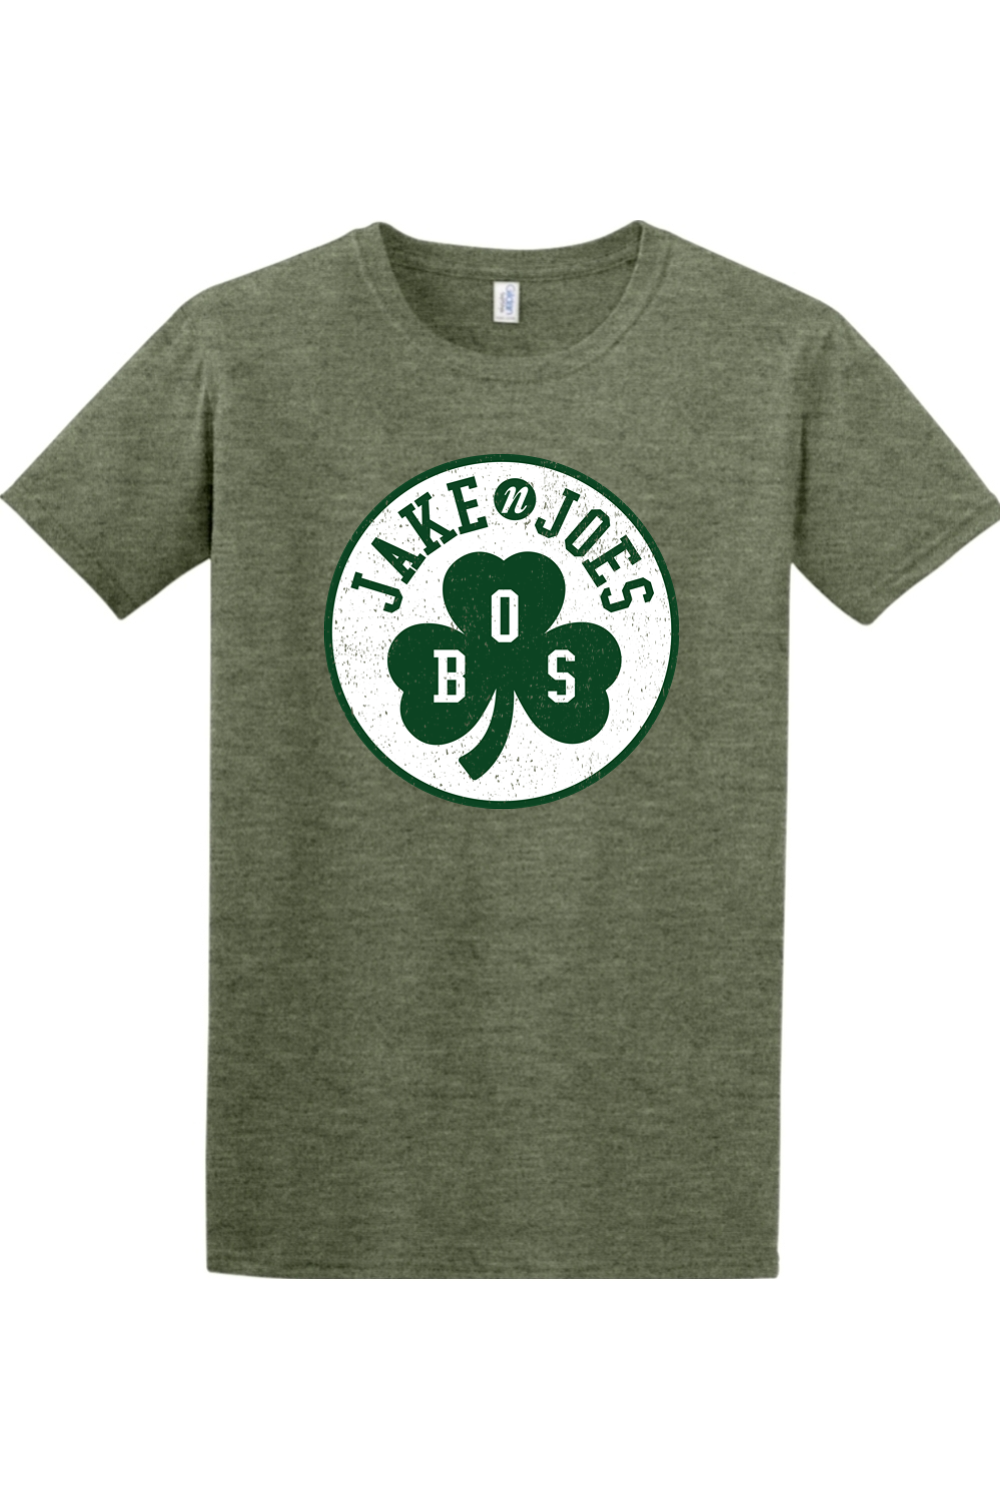 Jake n JOES Boston Irish Unisex T-Shirt